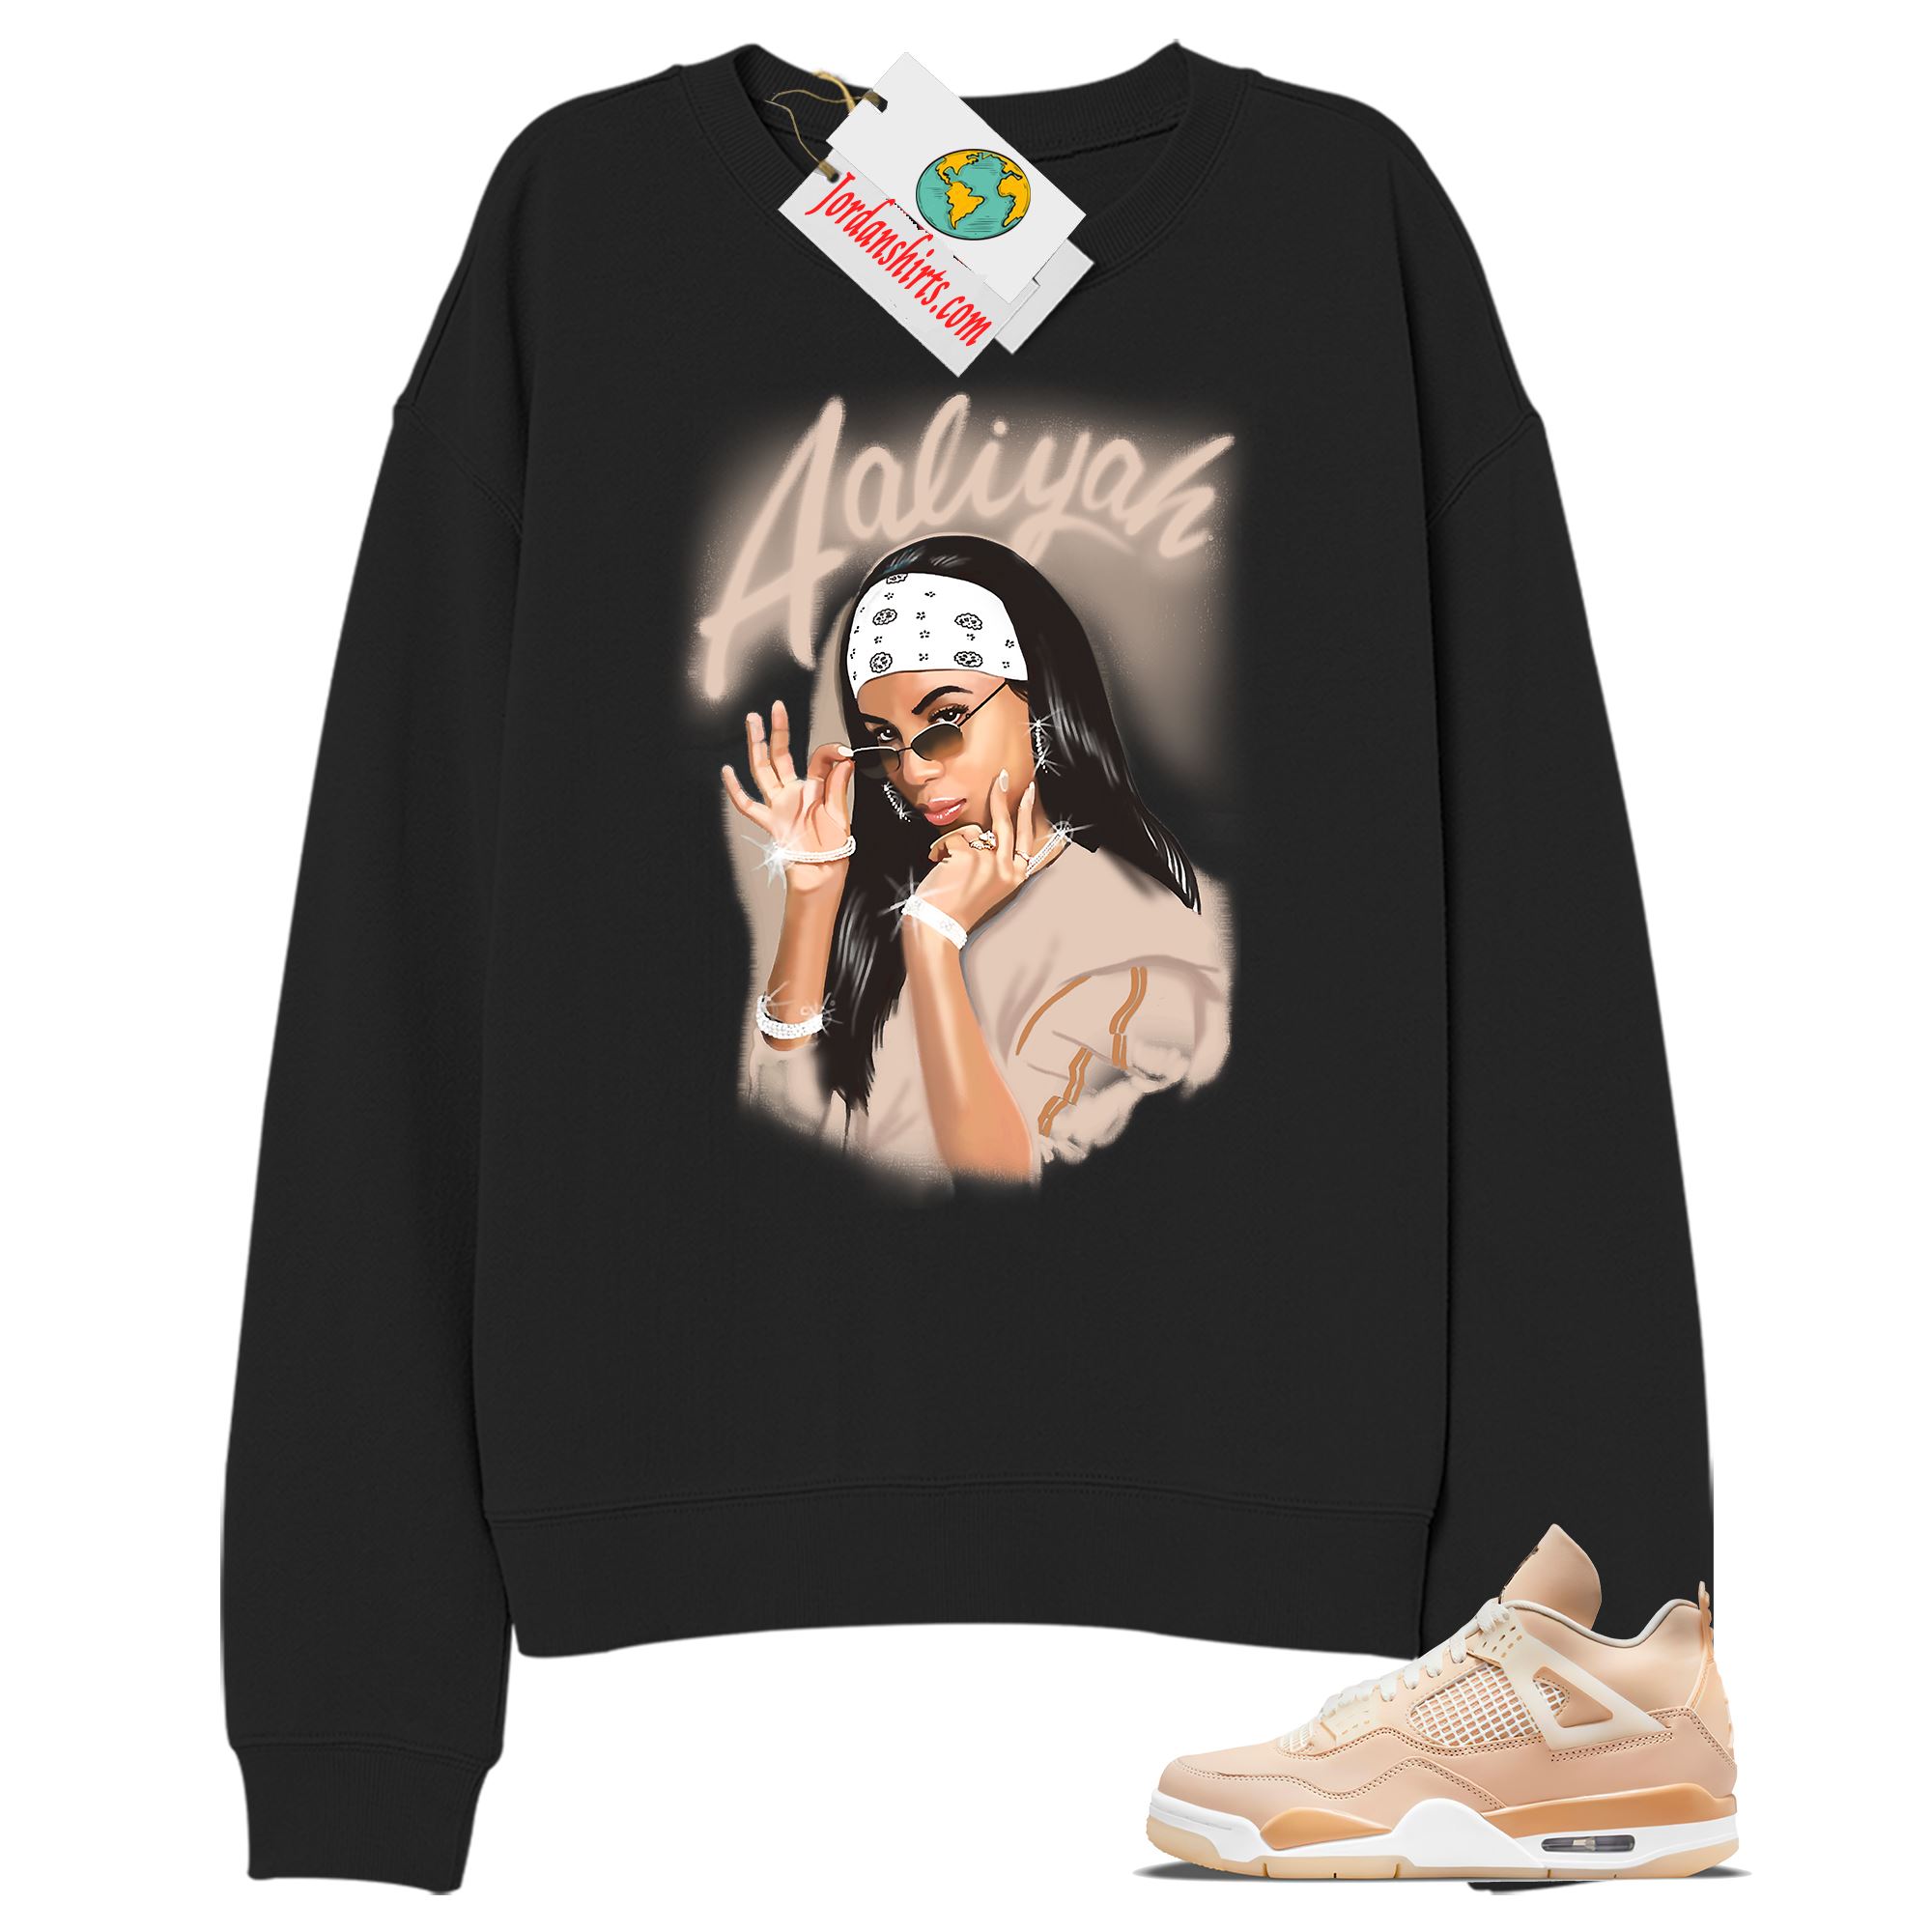 Jordan 4 Sweatshirt, Aaliyah Black Sweatshirt Air Jordan 4 Shimmer 4s Full Size Up To 5xl